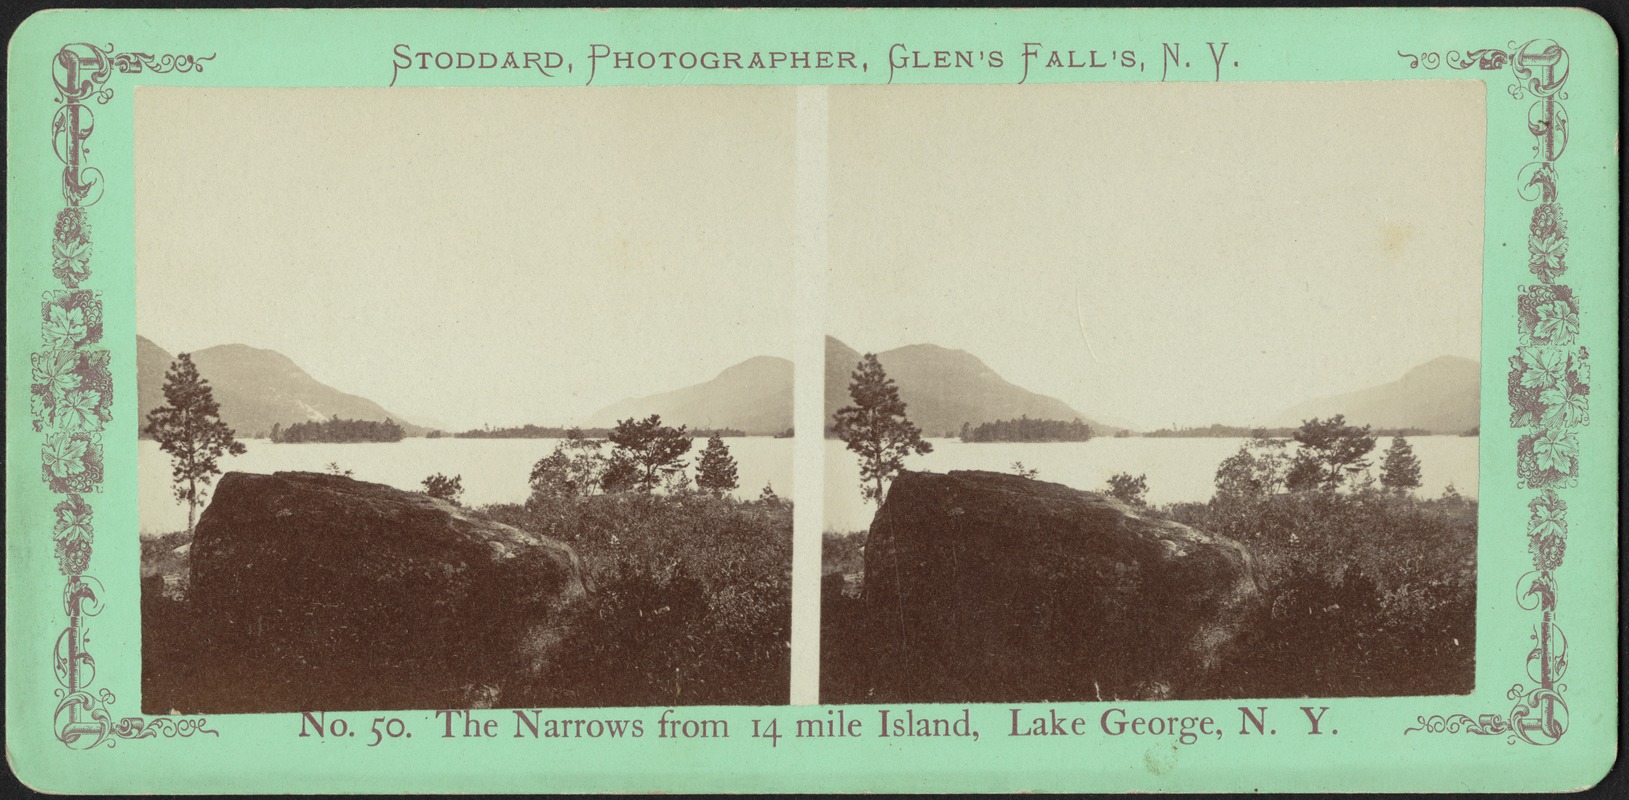 The Narrows from 14 mile Island, Lake George, N. Y.